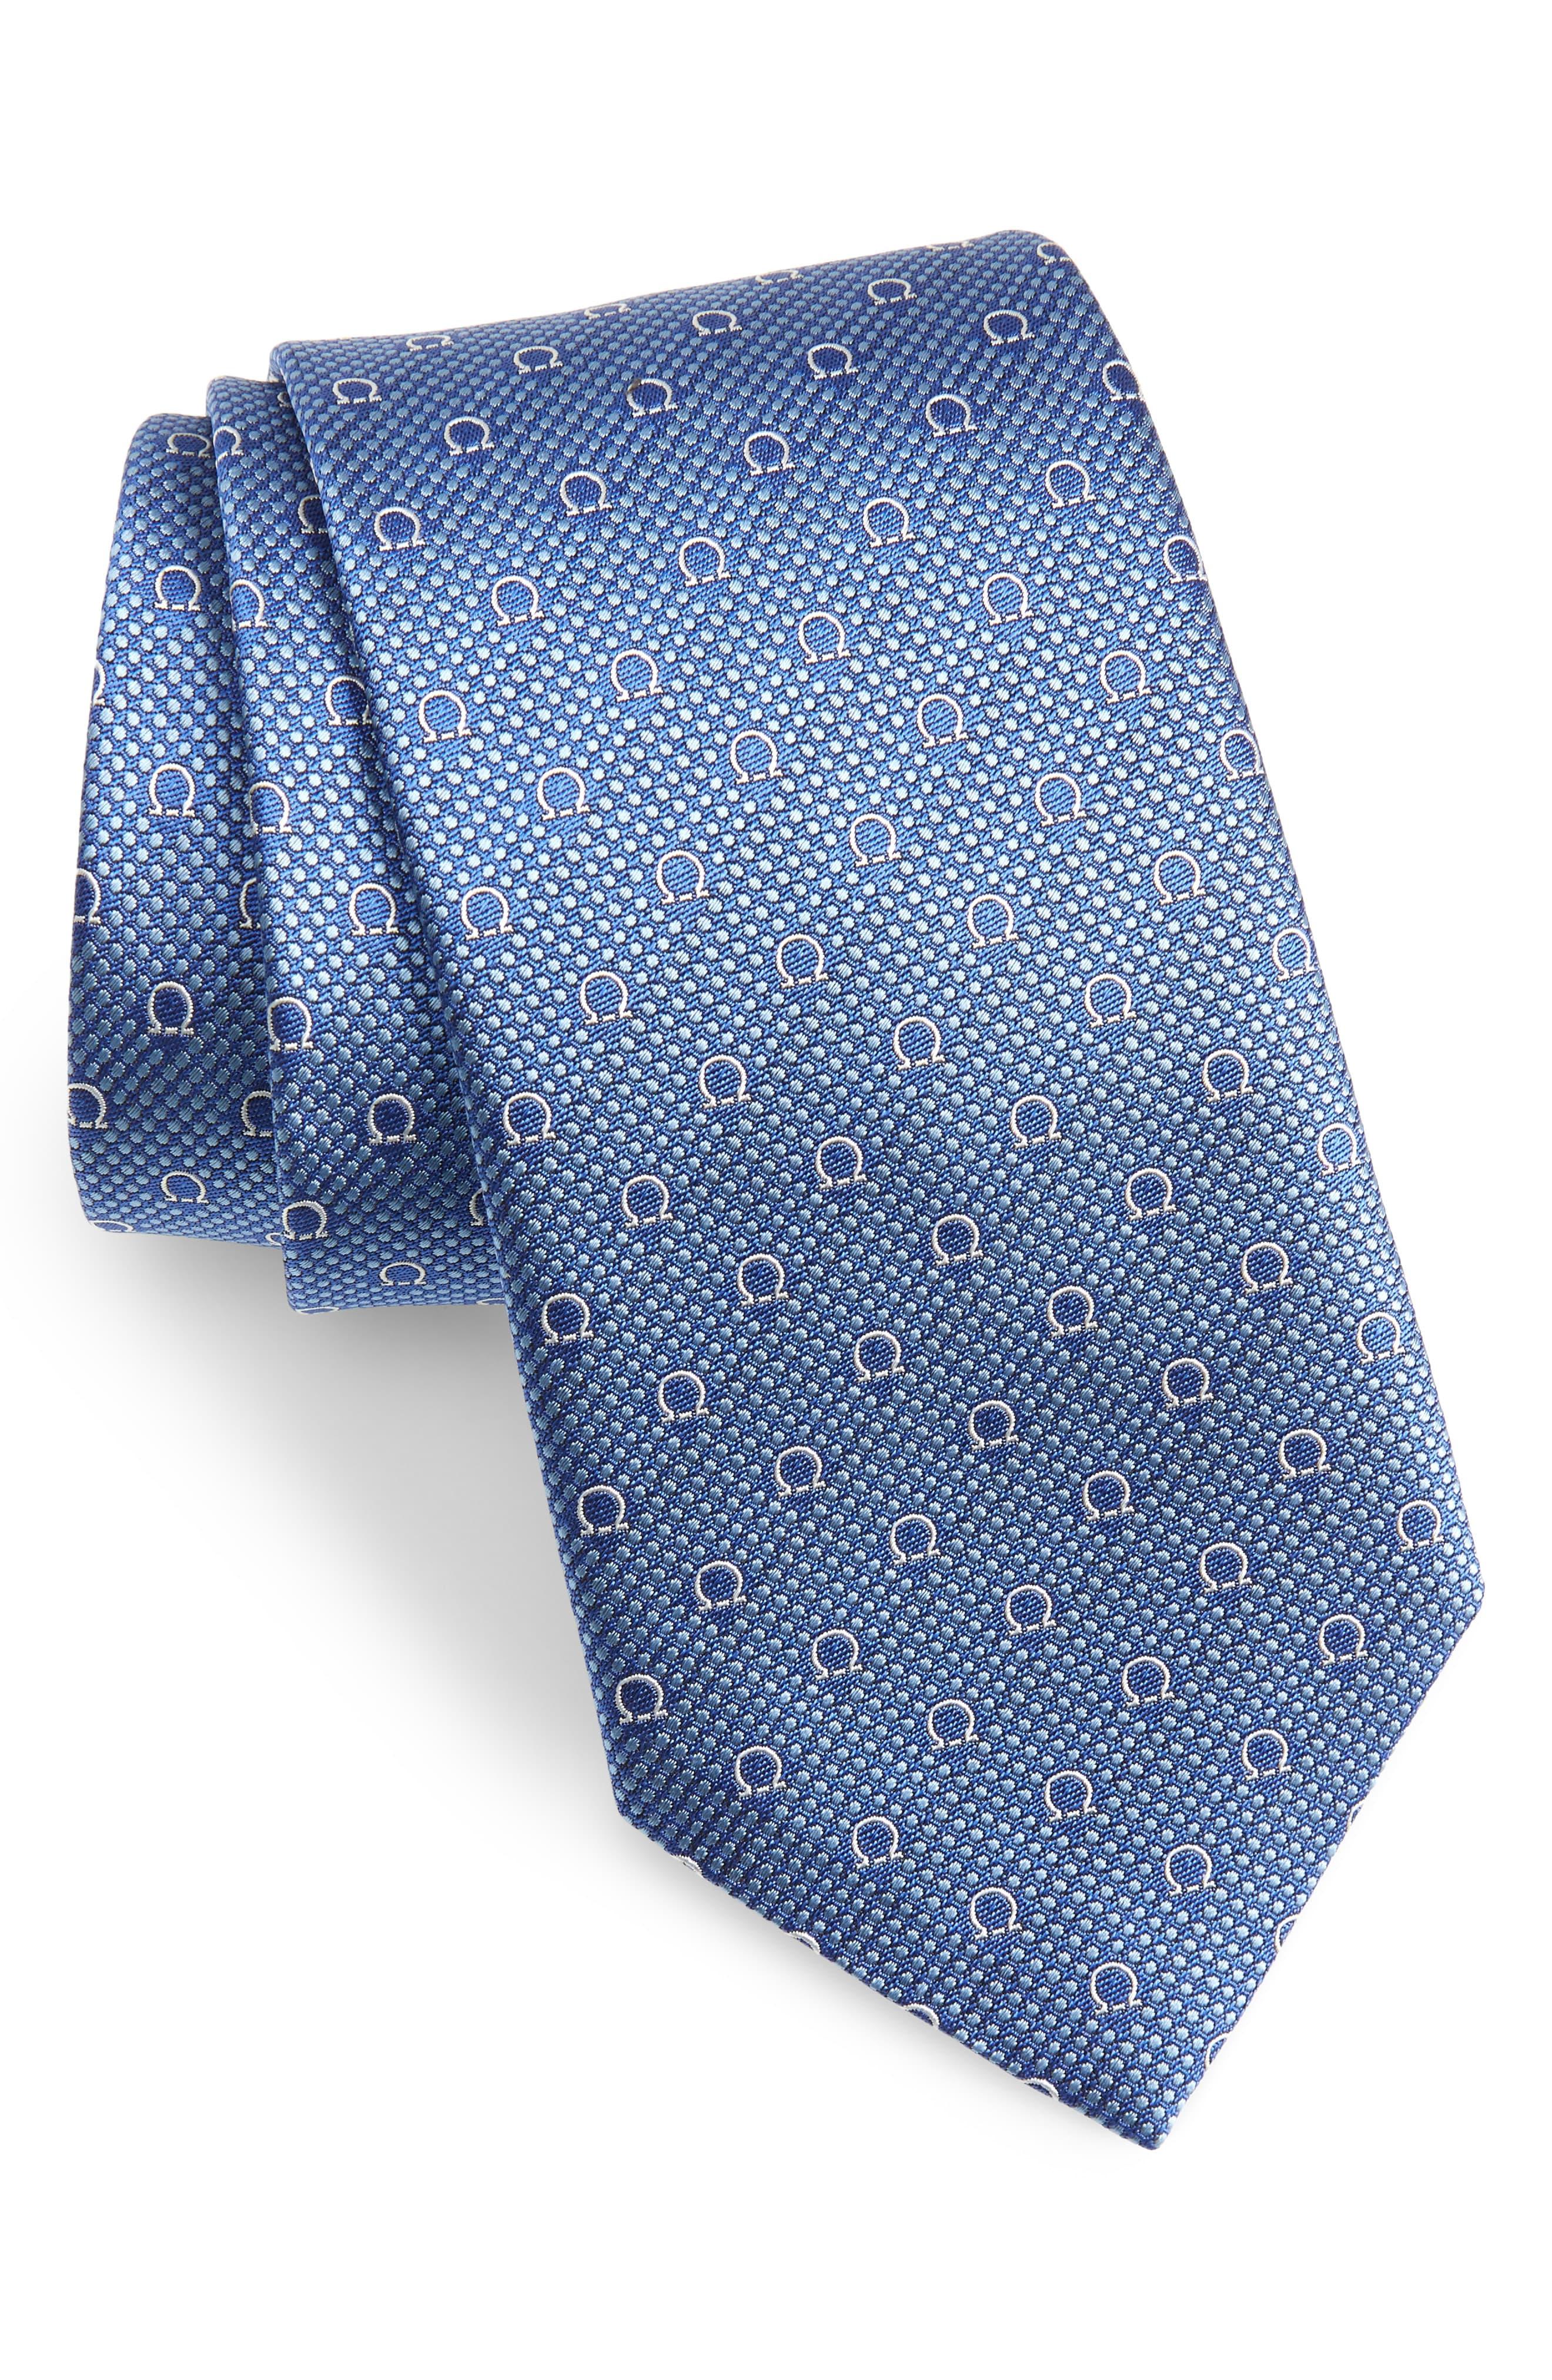 Ferragamo Gancini Silk Tie in Blue for Men - Lyst